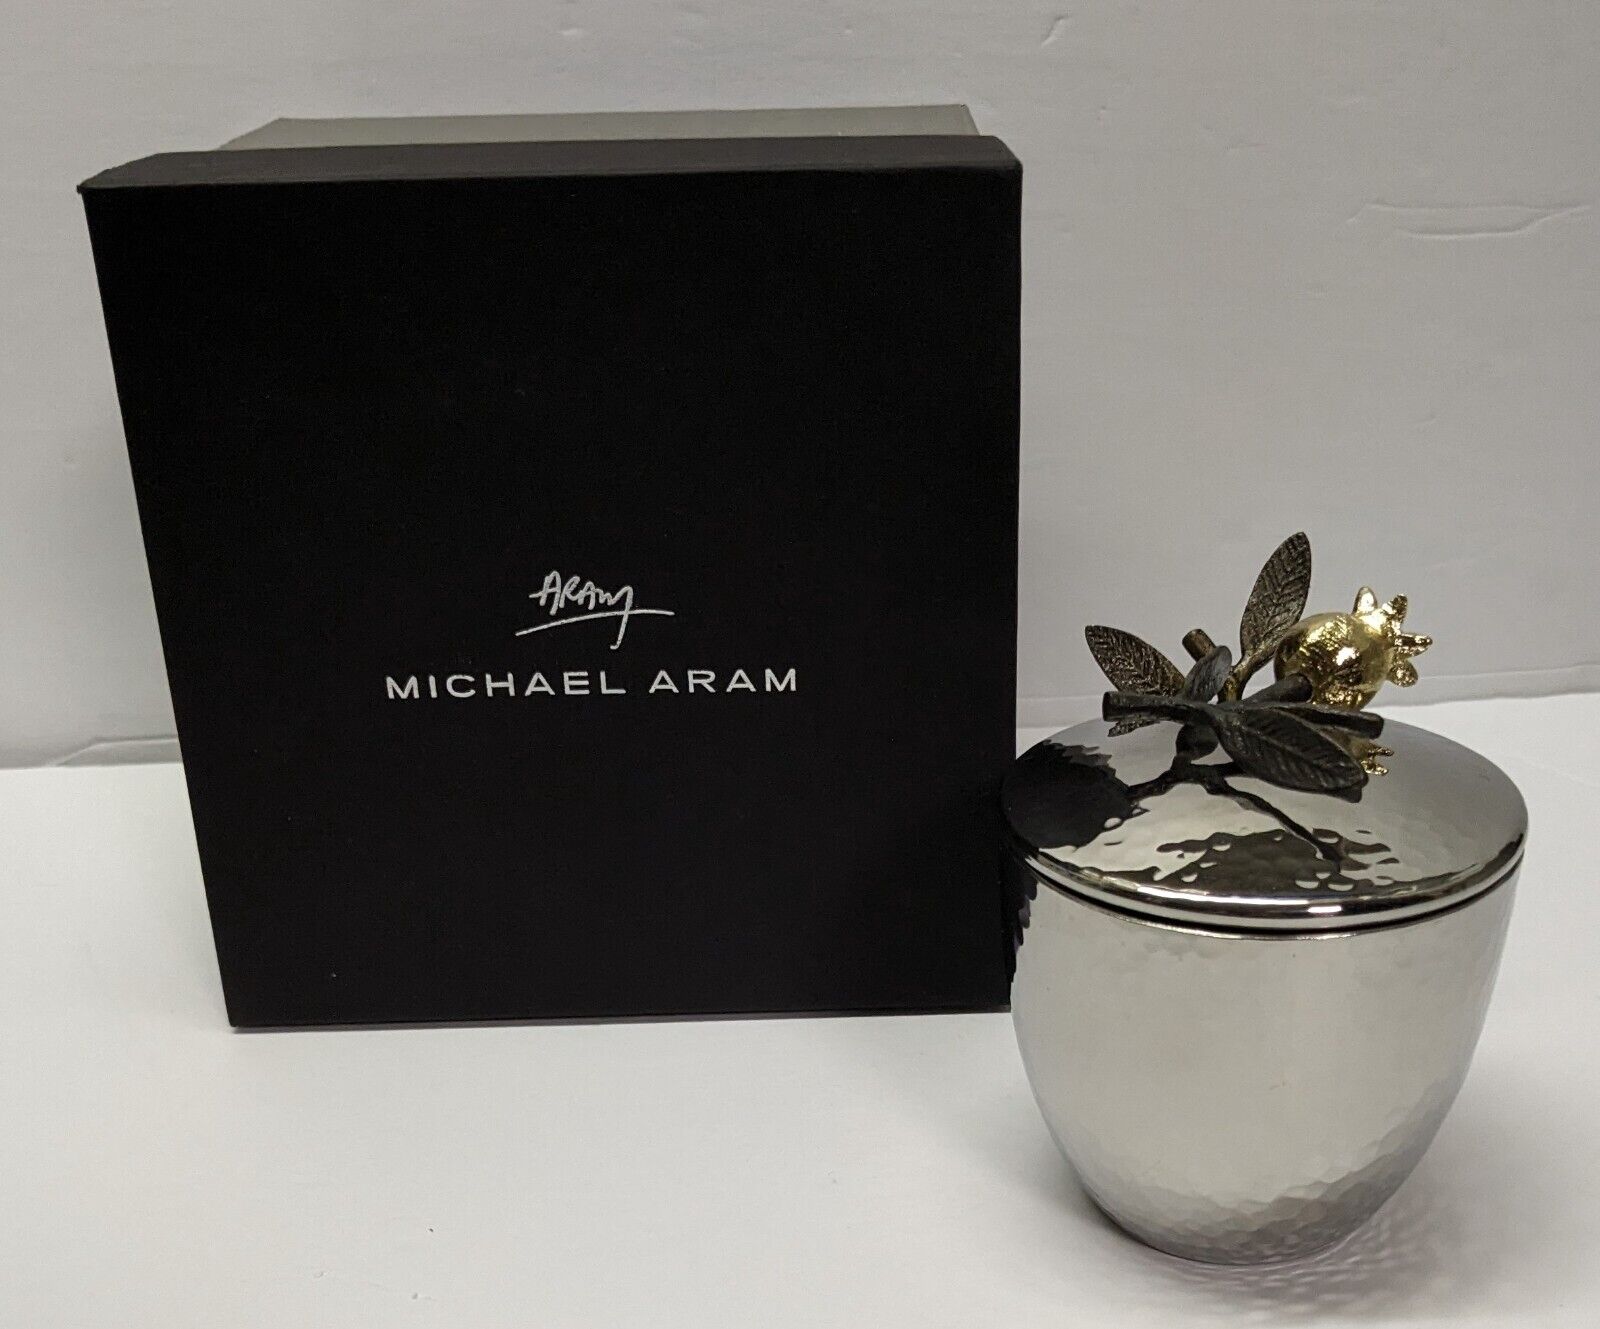 Michael Aram Pomegranate Sugar Bowl Pot with Spoon New in Box